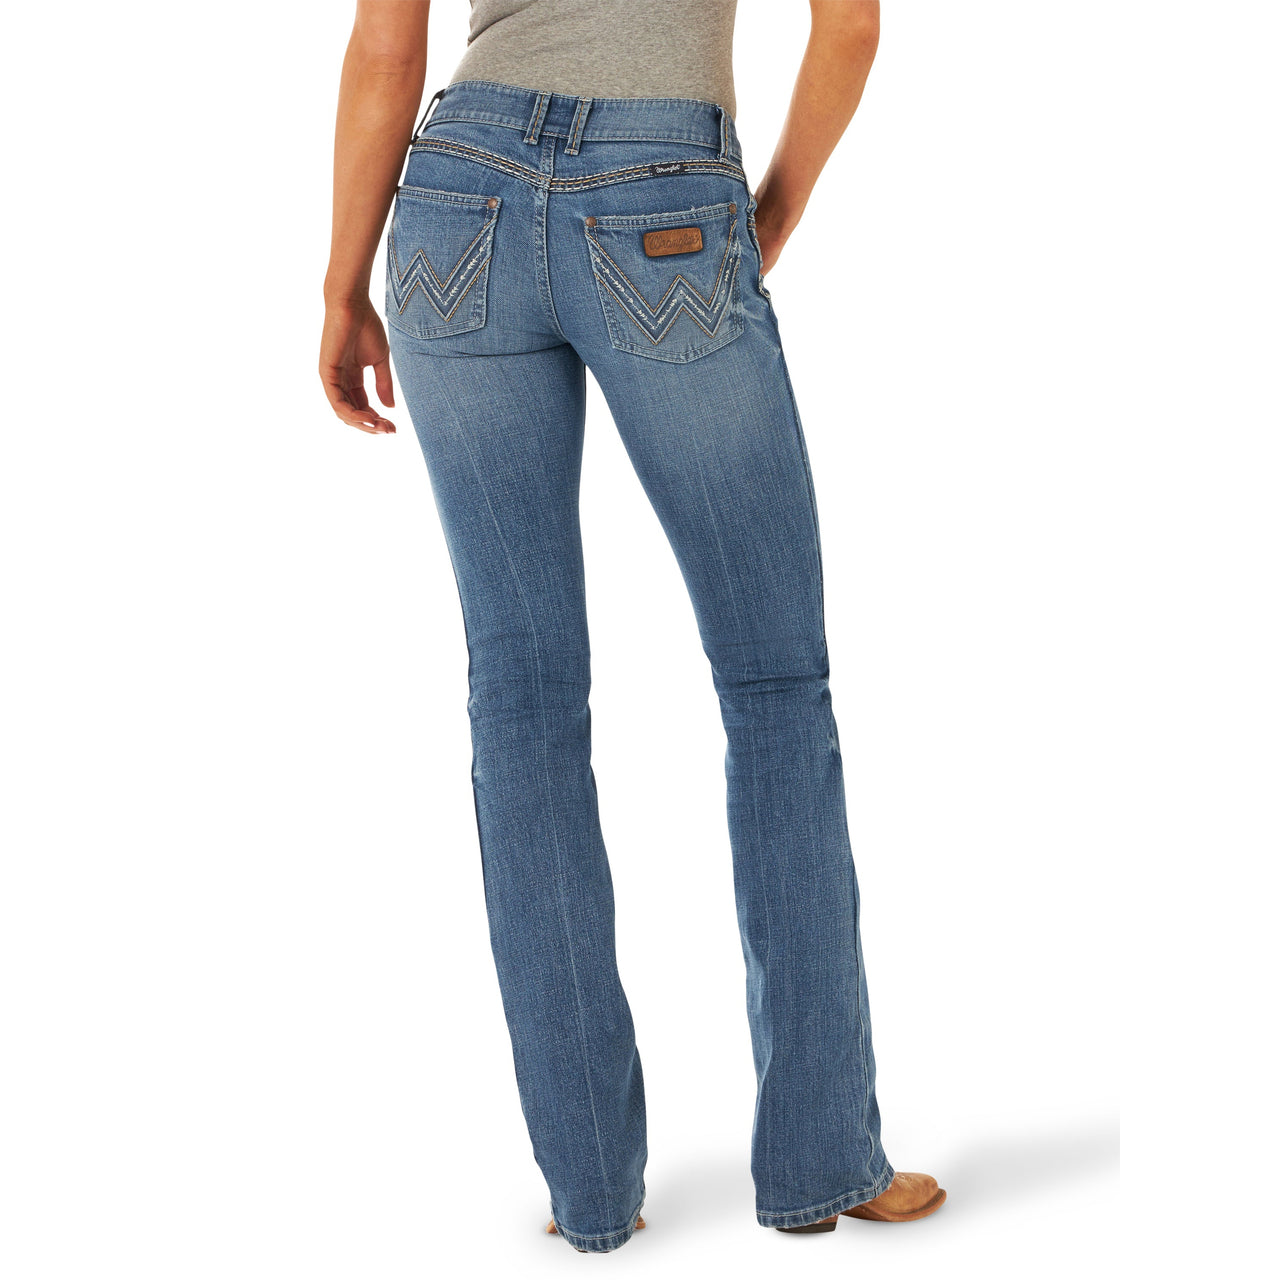 Women's Jeans & Pants